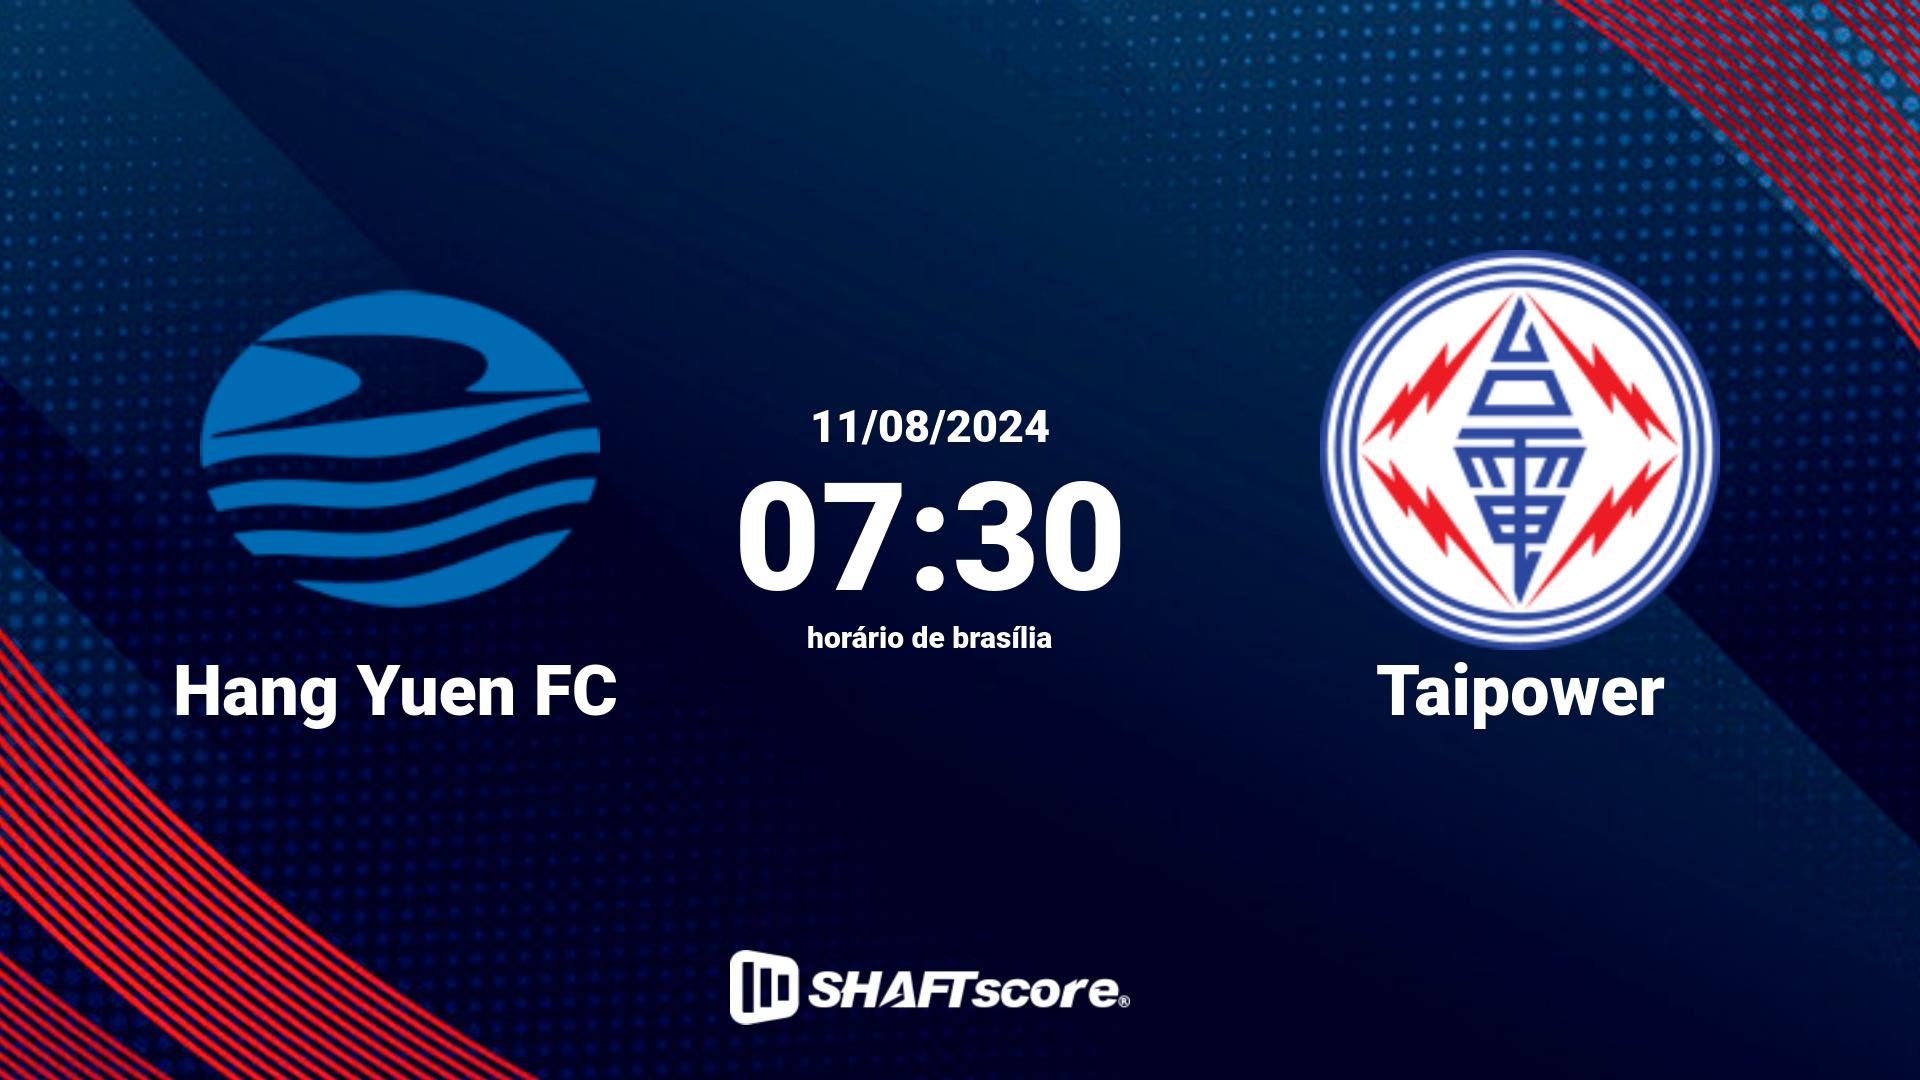 Estatísticas do jogo Hang Yuen FC vs Taipower 11.08 07:30